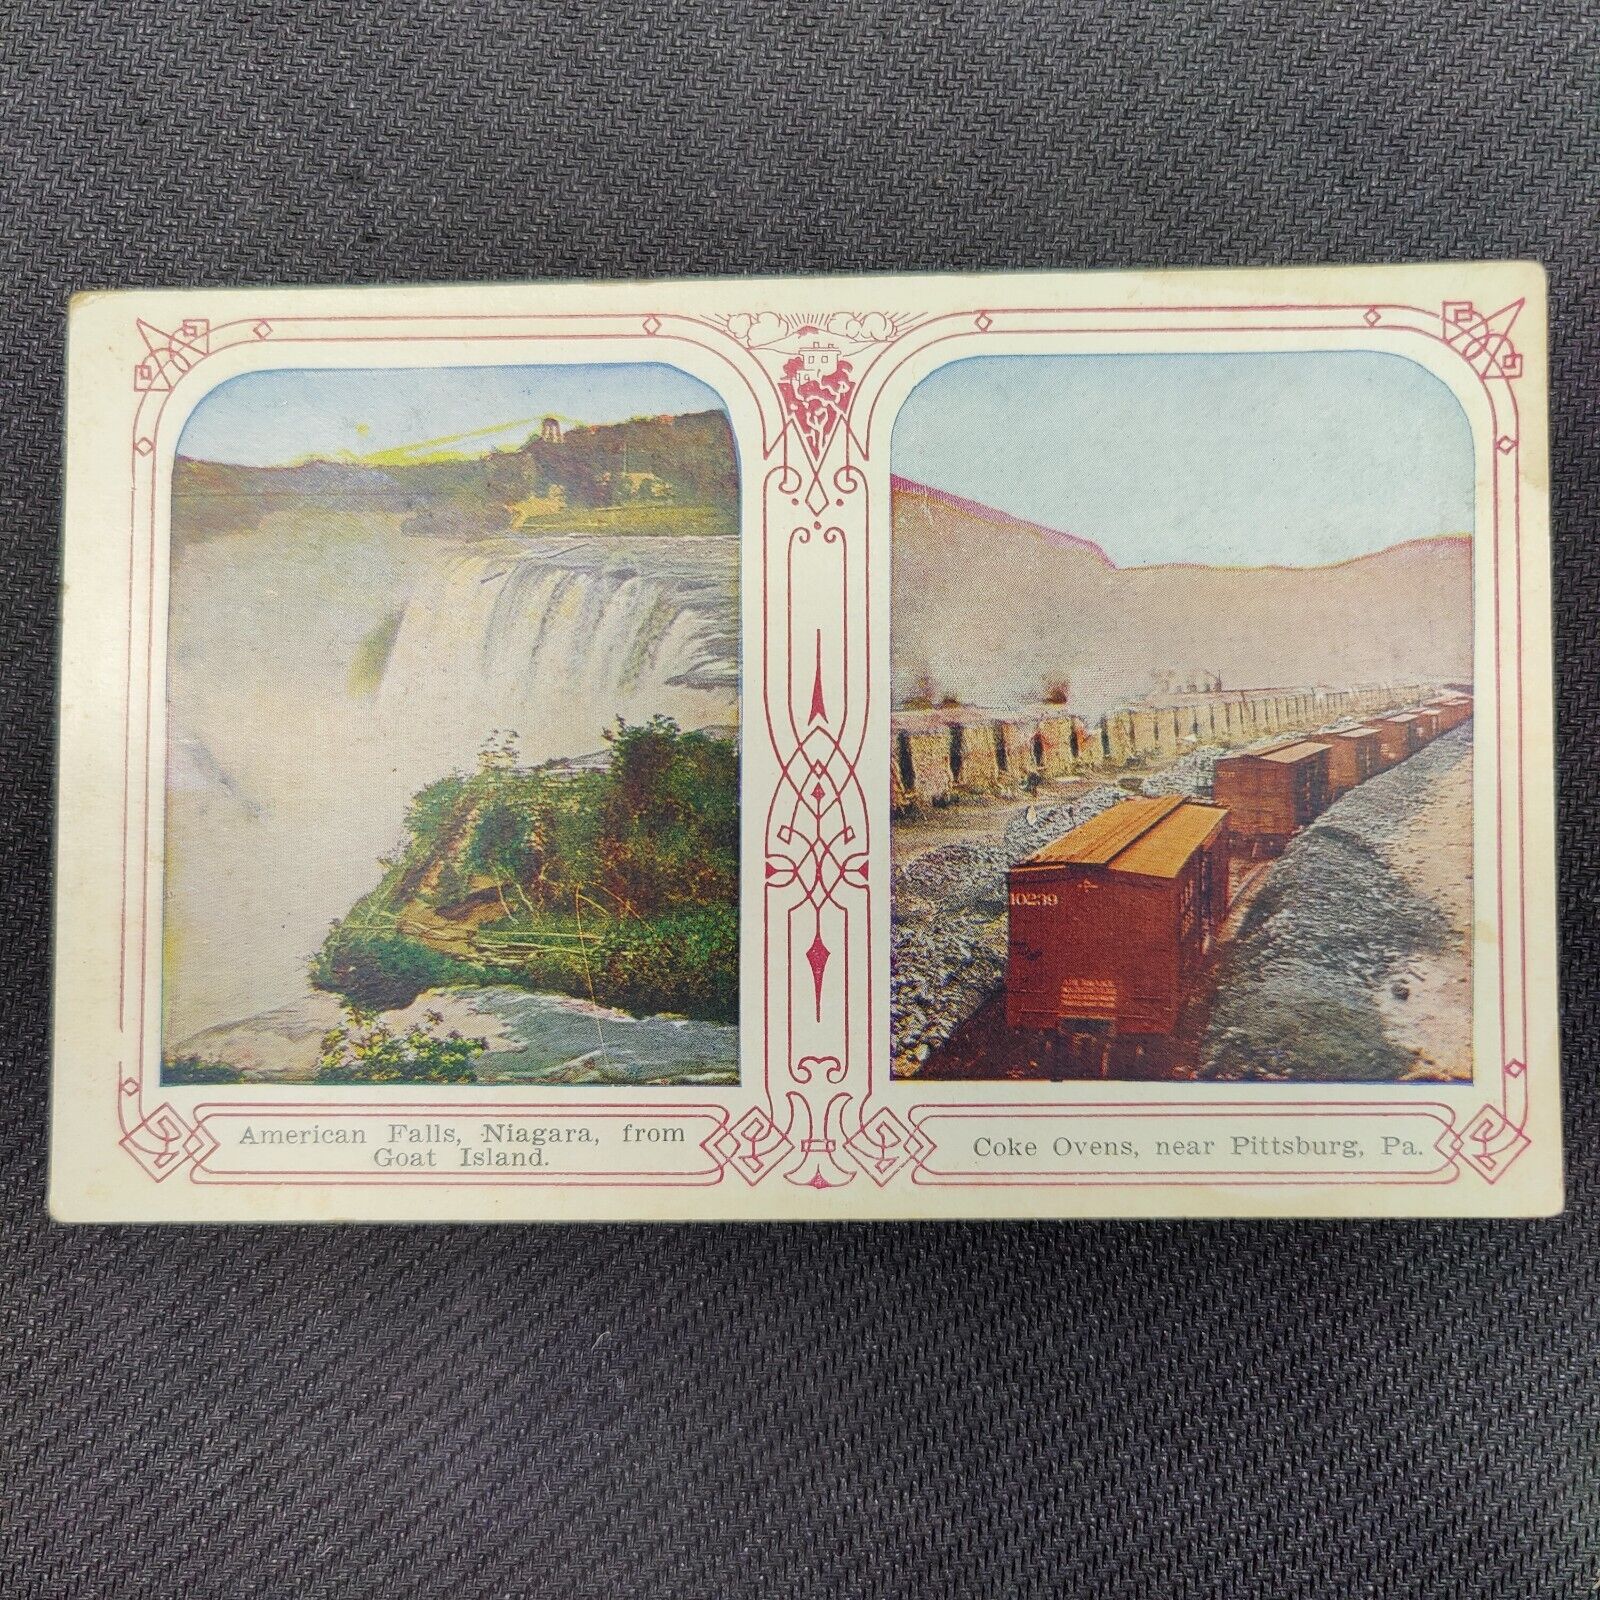 RARE Atq c. 1920s Postcard AMERICAN NIAGRA FALLS + PITTSBURG PA COKE OVENS